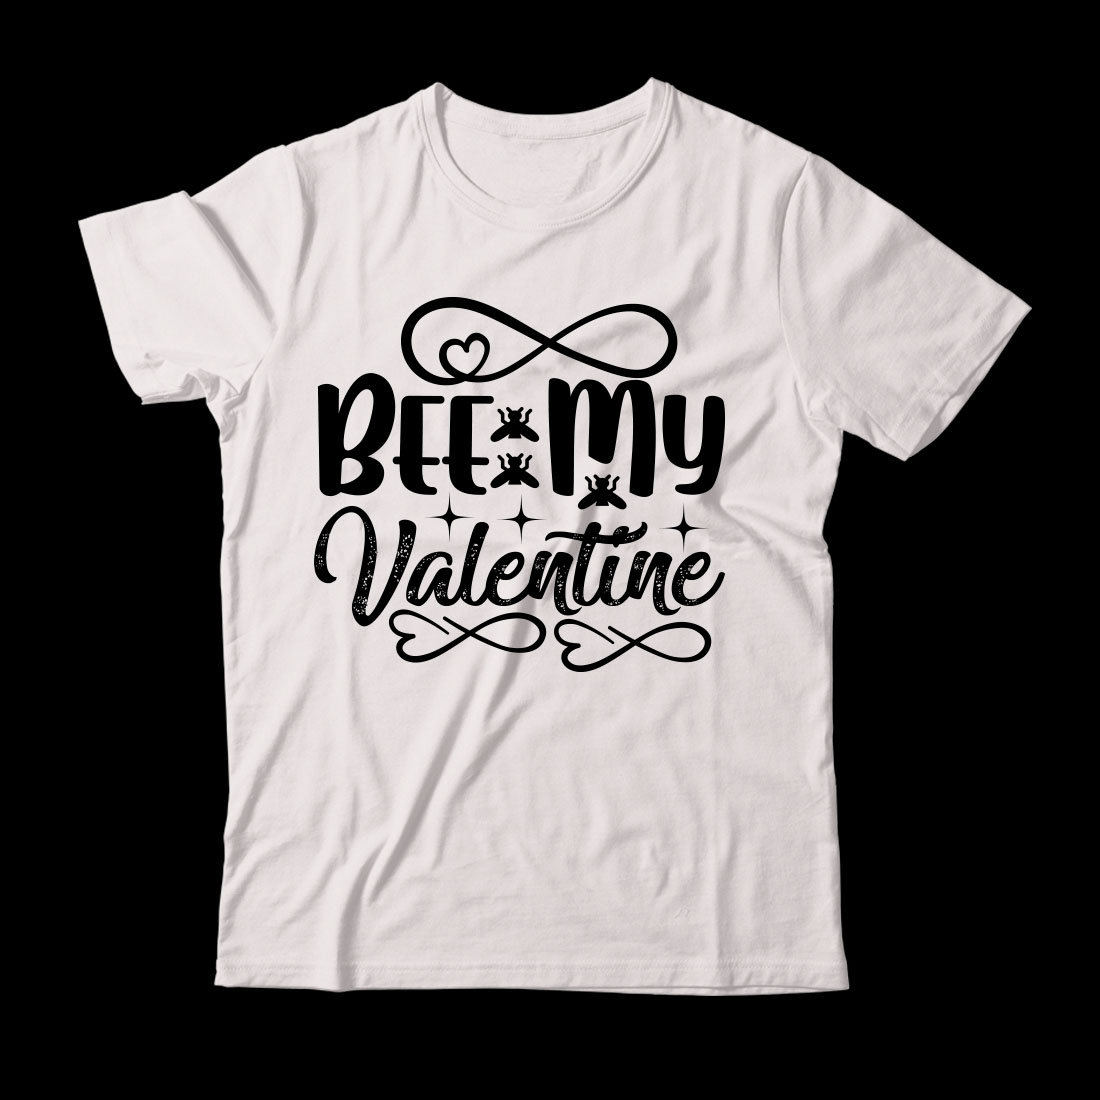 White t - shirt that says beemy valentine.